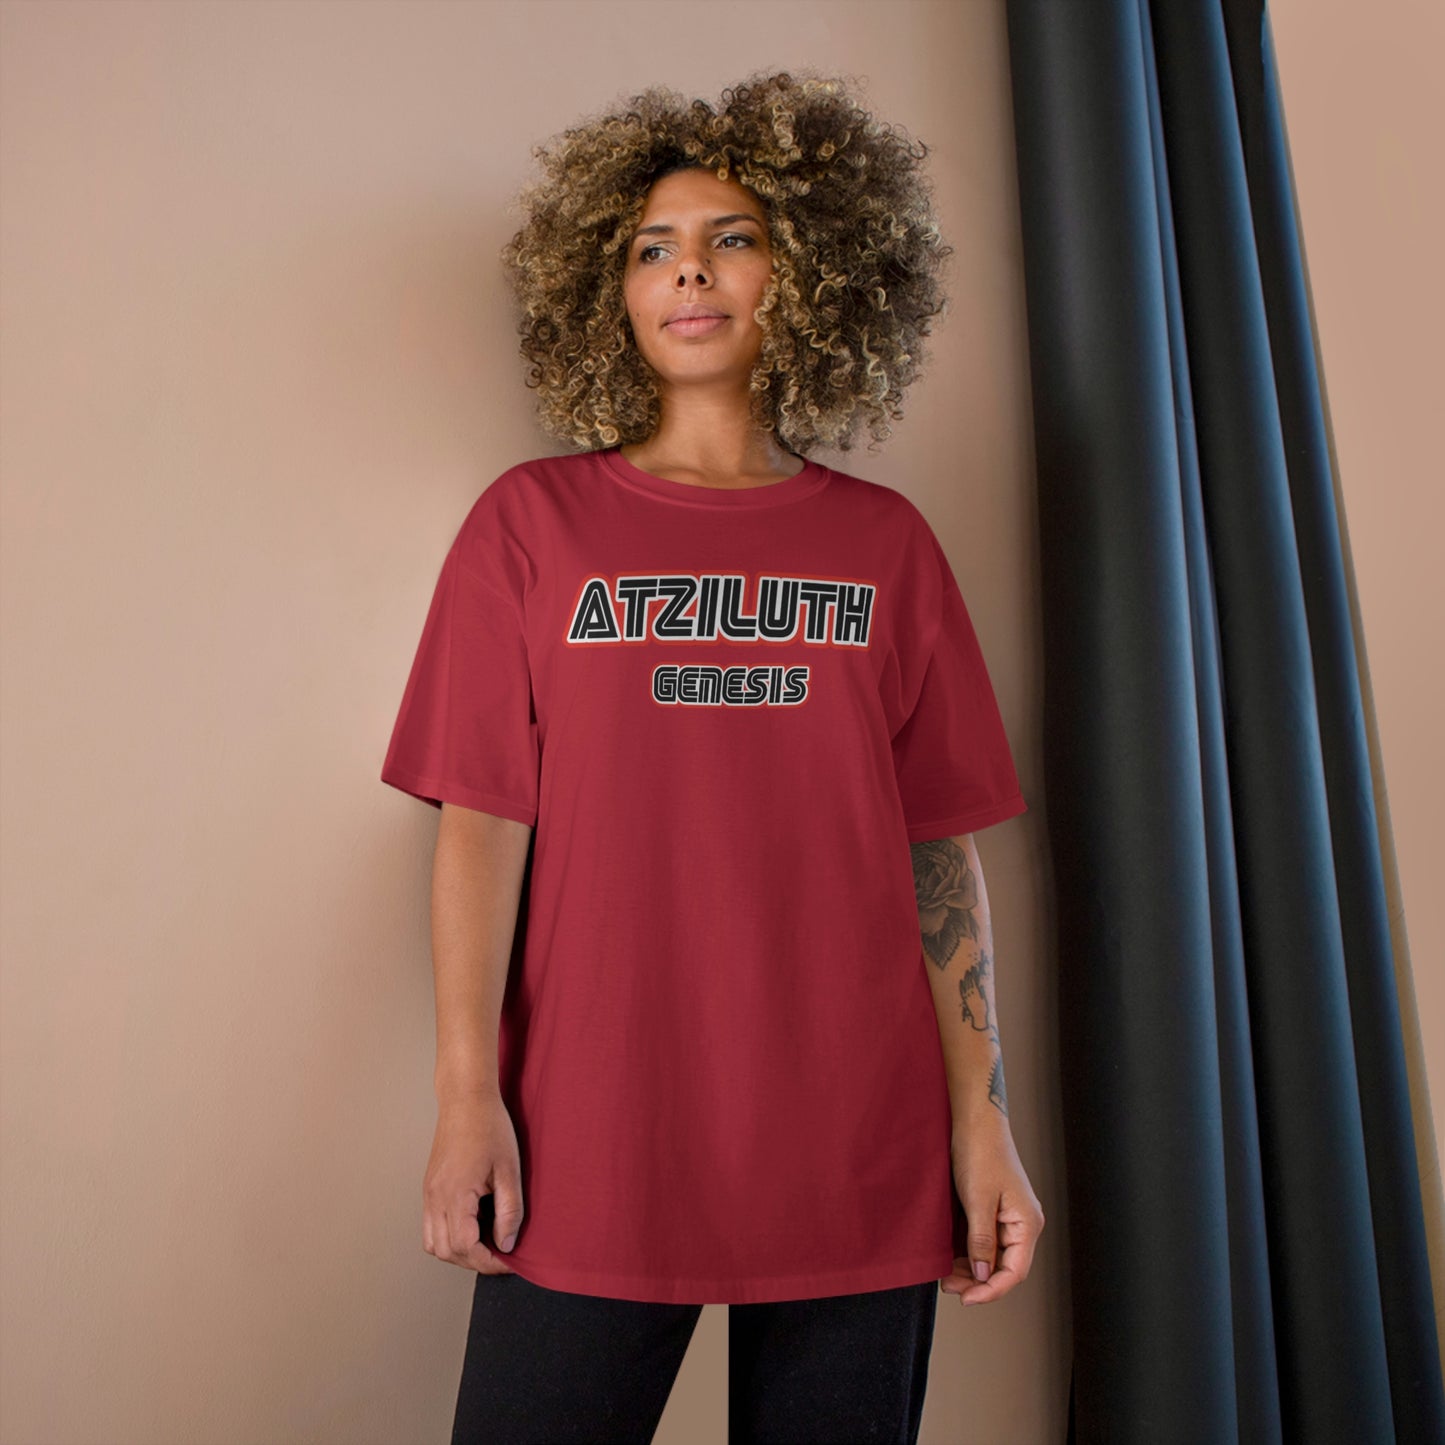 Atziluth Gallery x Champion "Atz Genesis"  T-Shirt